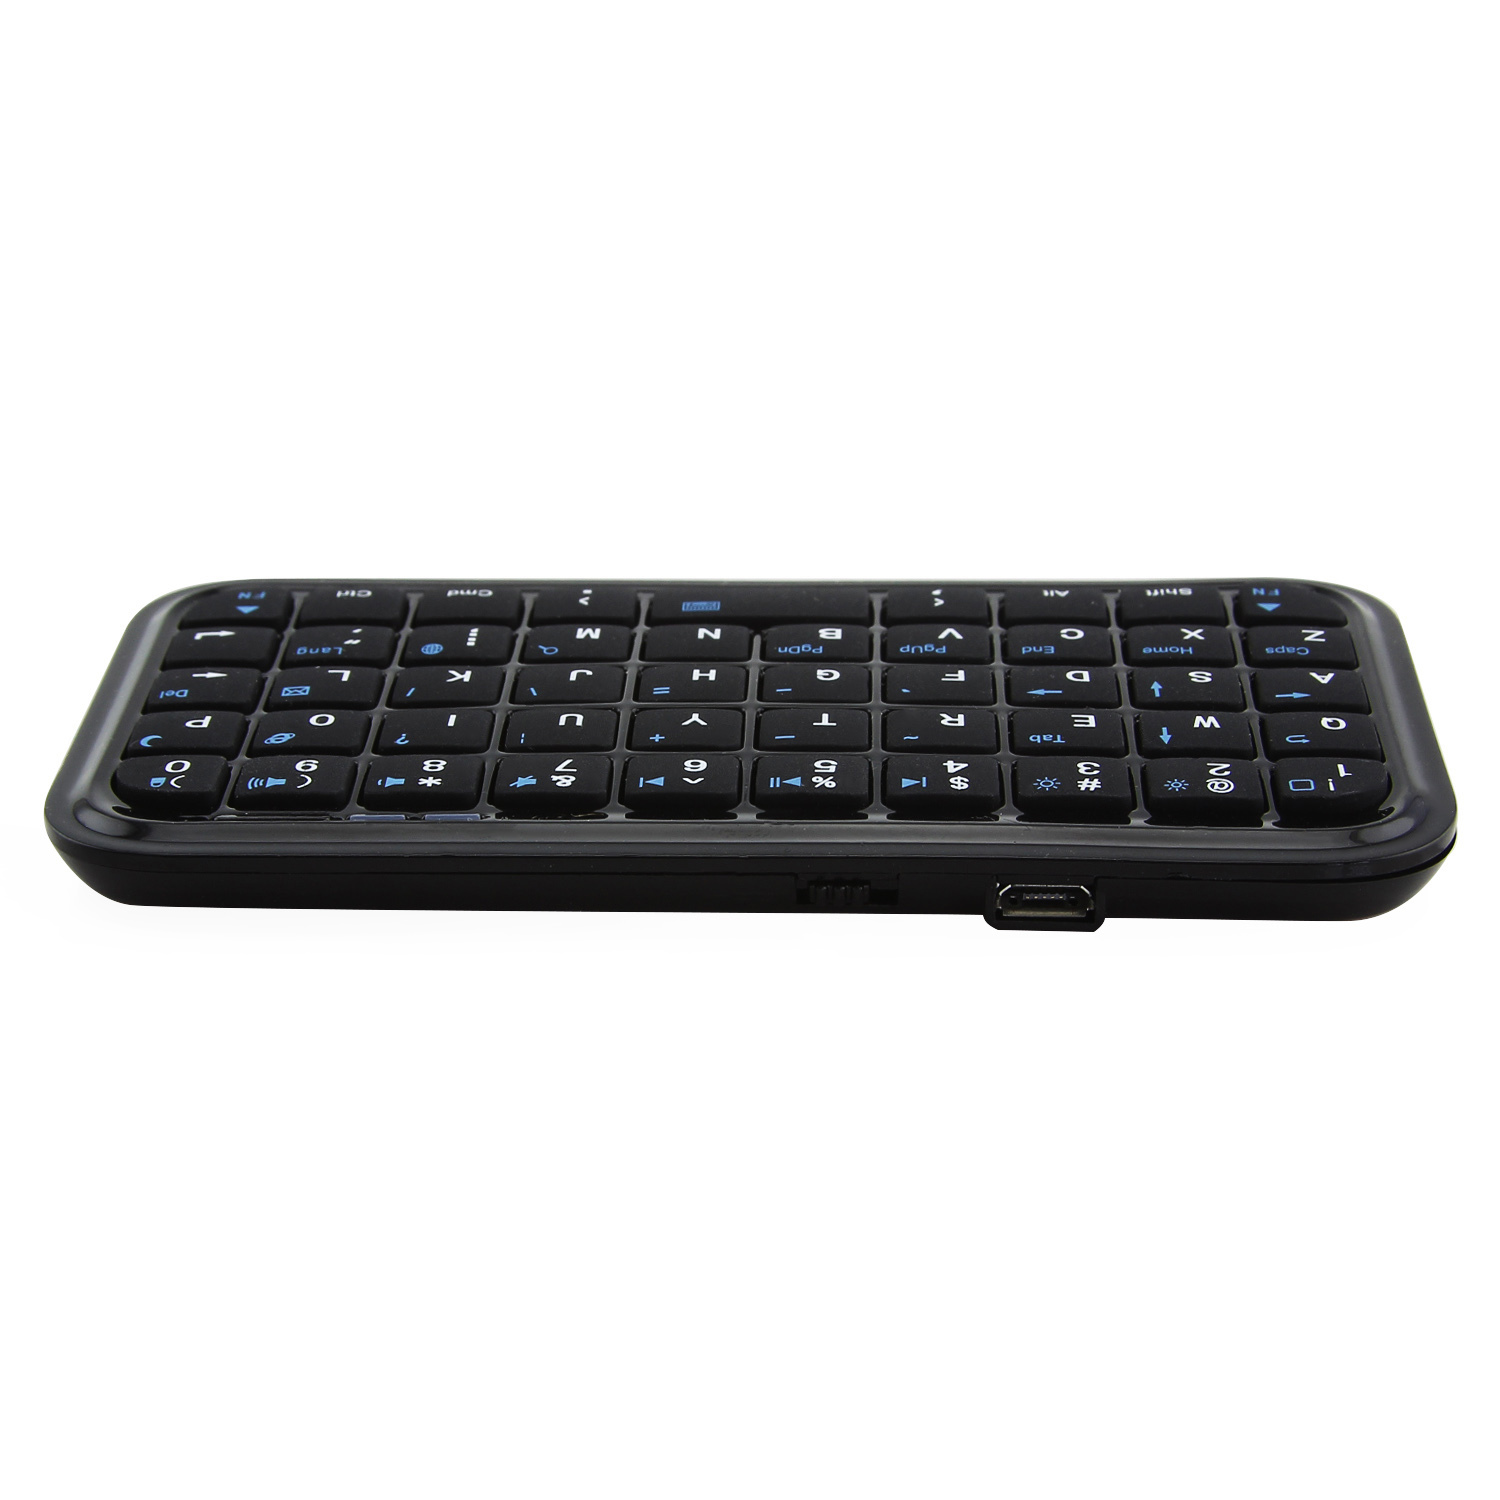 Bluetooth-Wireless-Mini-Keyboard-Slim-Black-Computer-Portable-Small-Hand-Keypad-Bo-iPhone-Android-Smart-Phone (3)